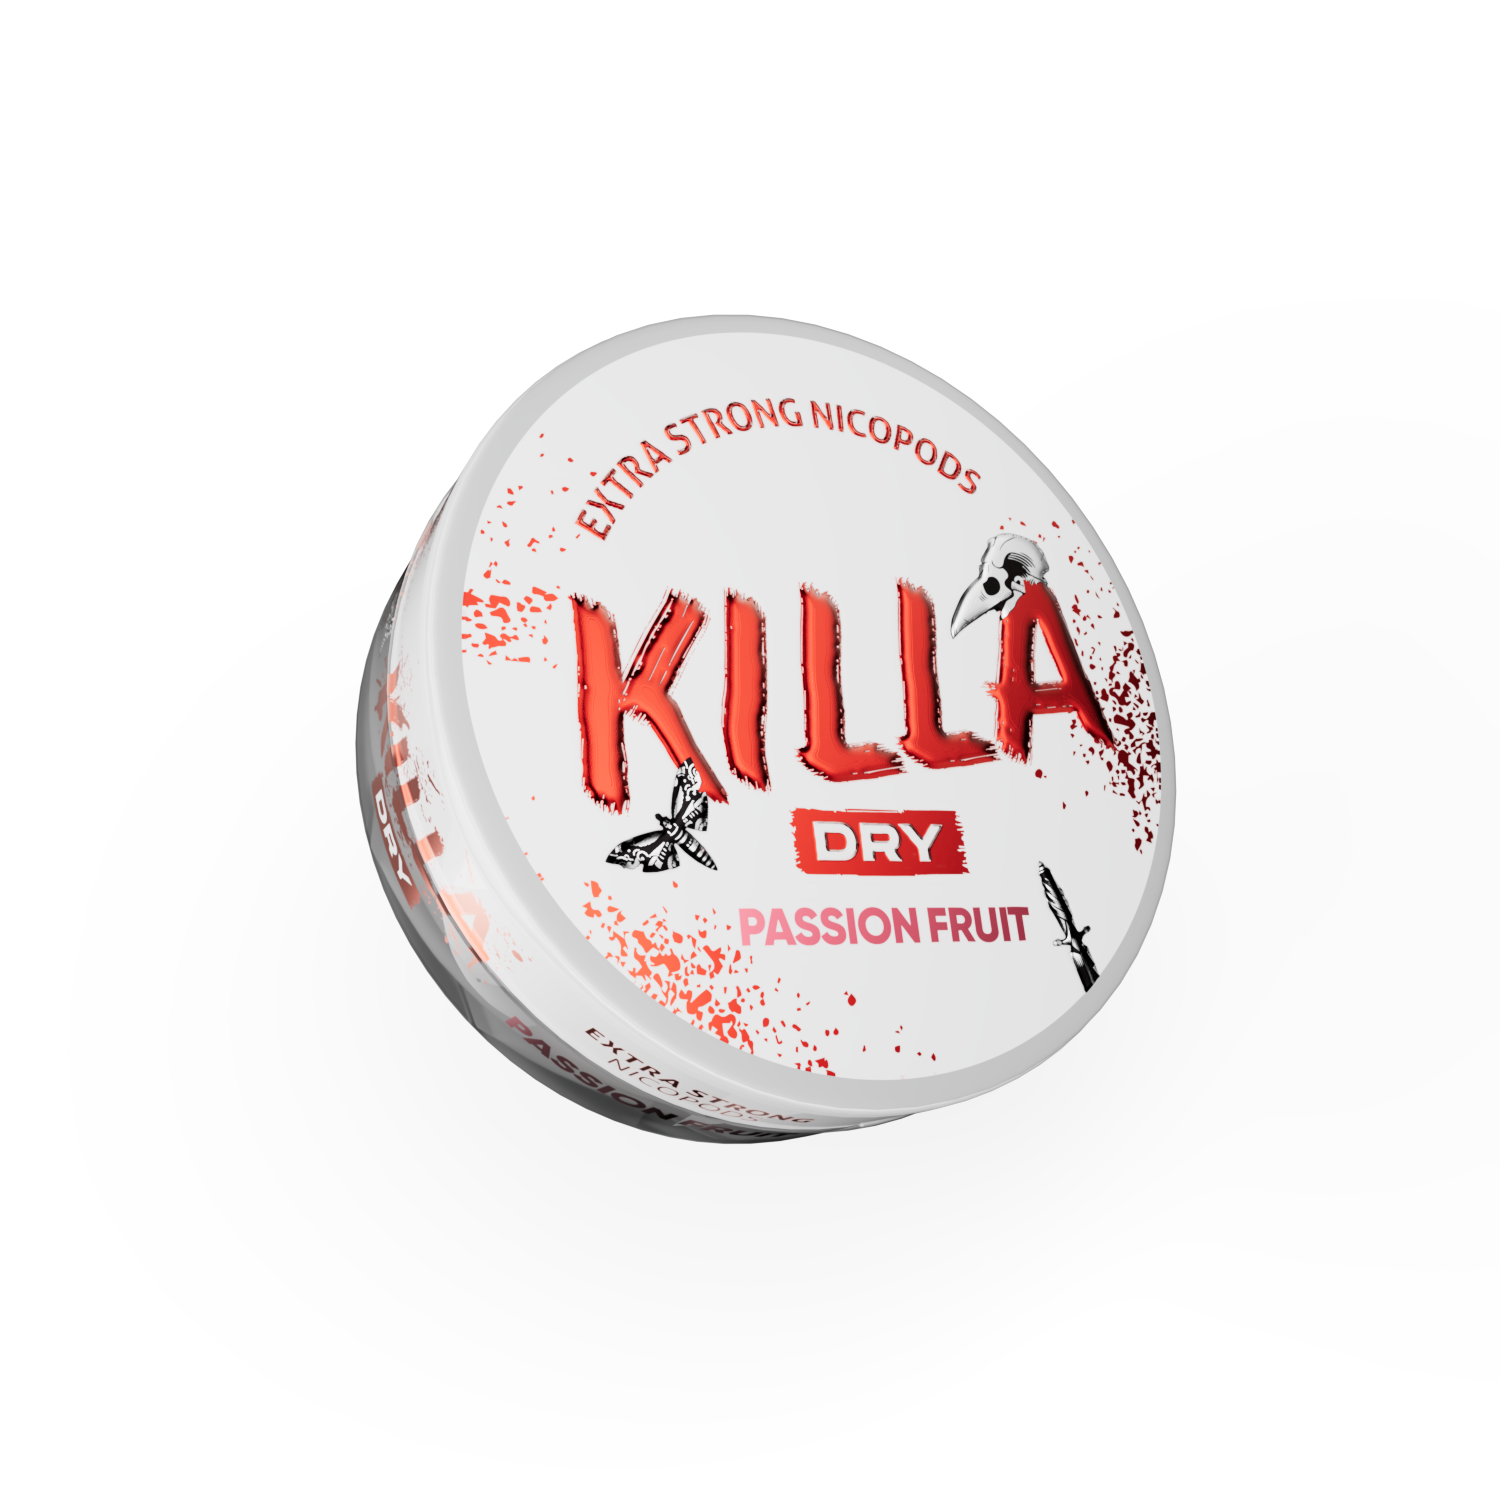 Killa Dry Passion Fruit